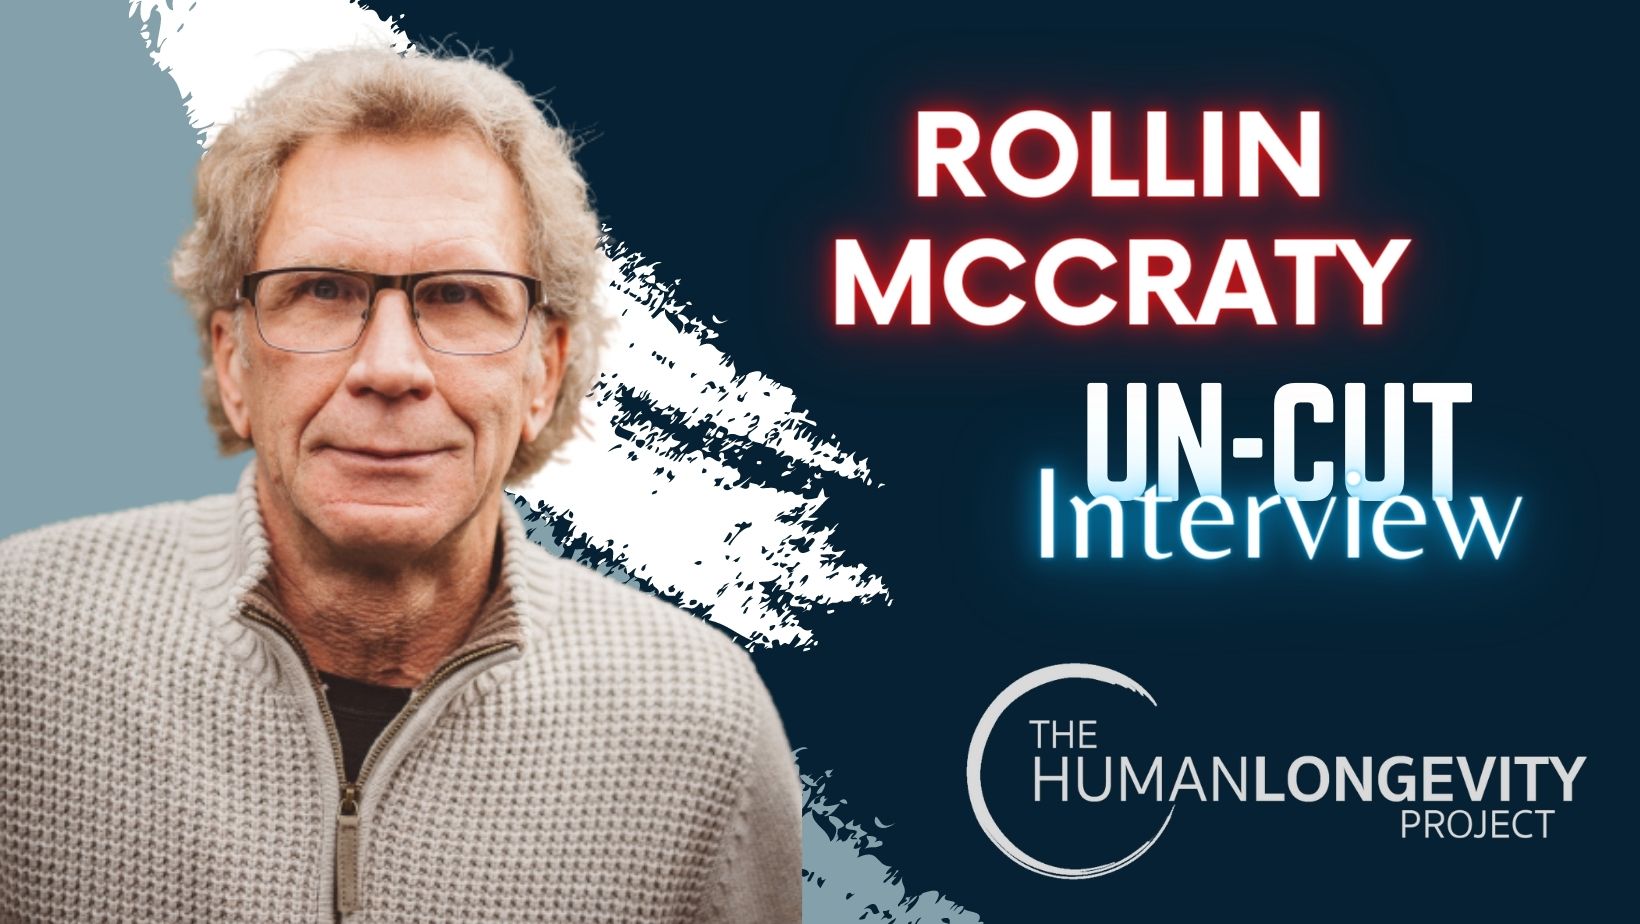 Human Longevity Project Uncut Interview With Rollin McCraty, Ph.D.